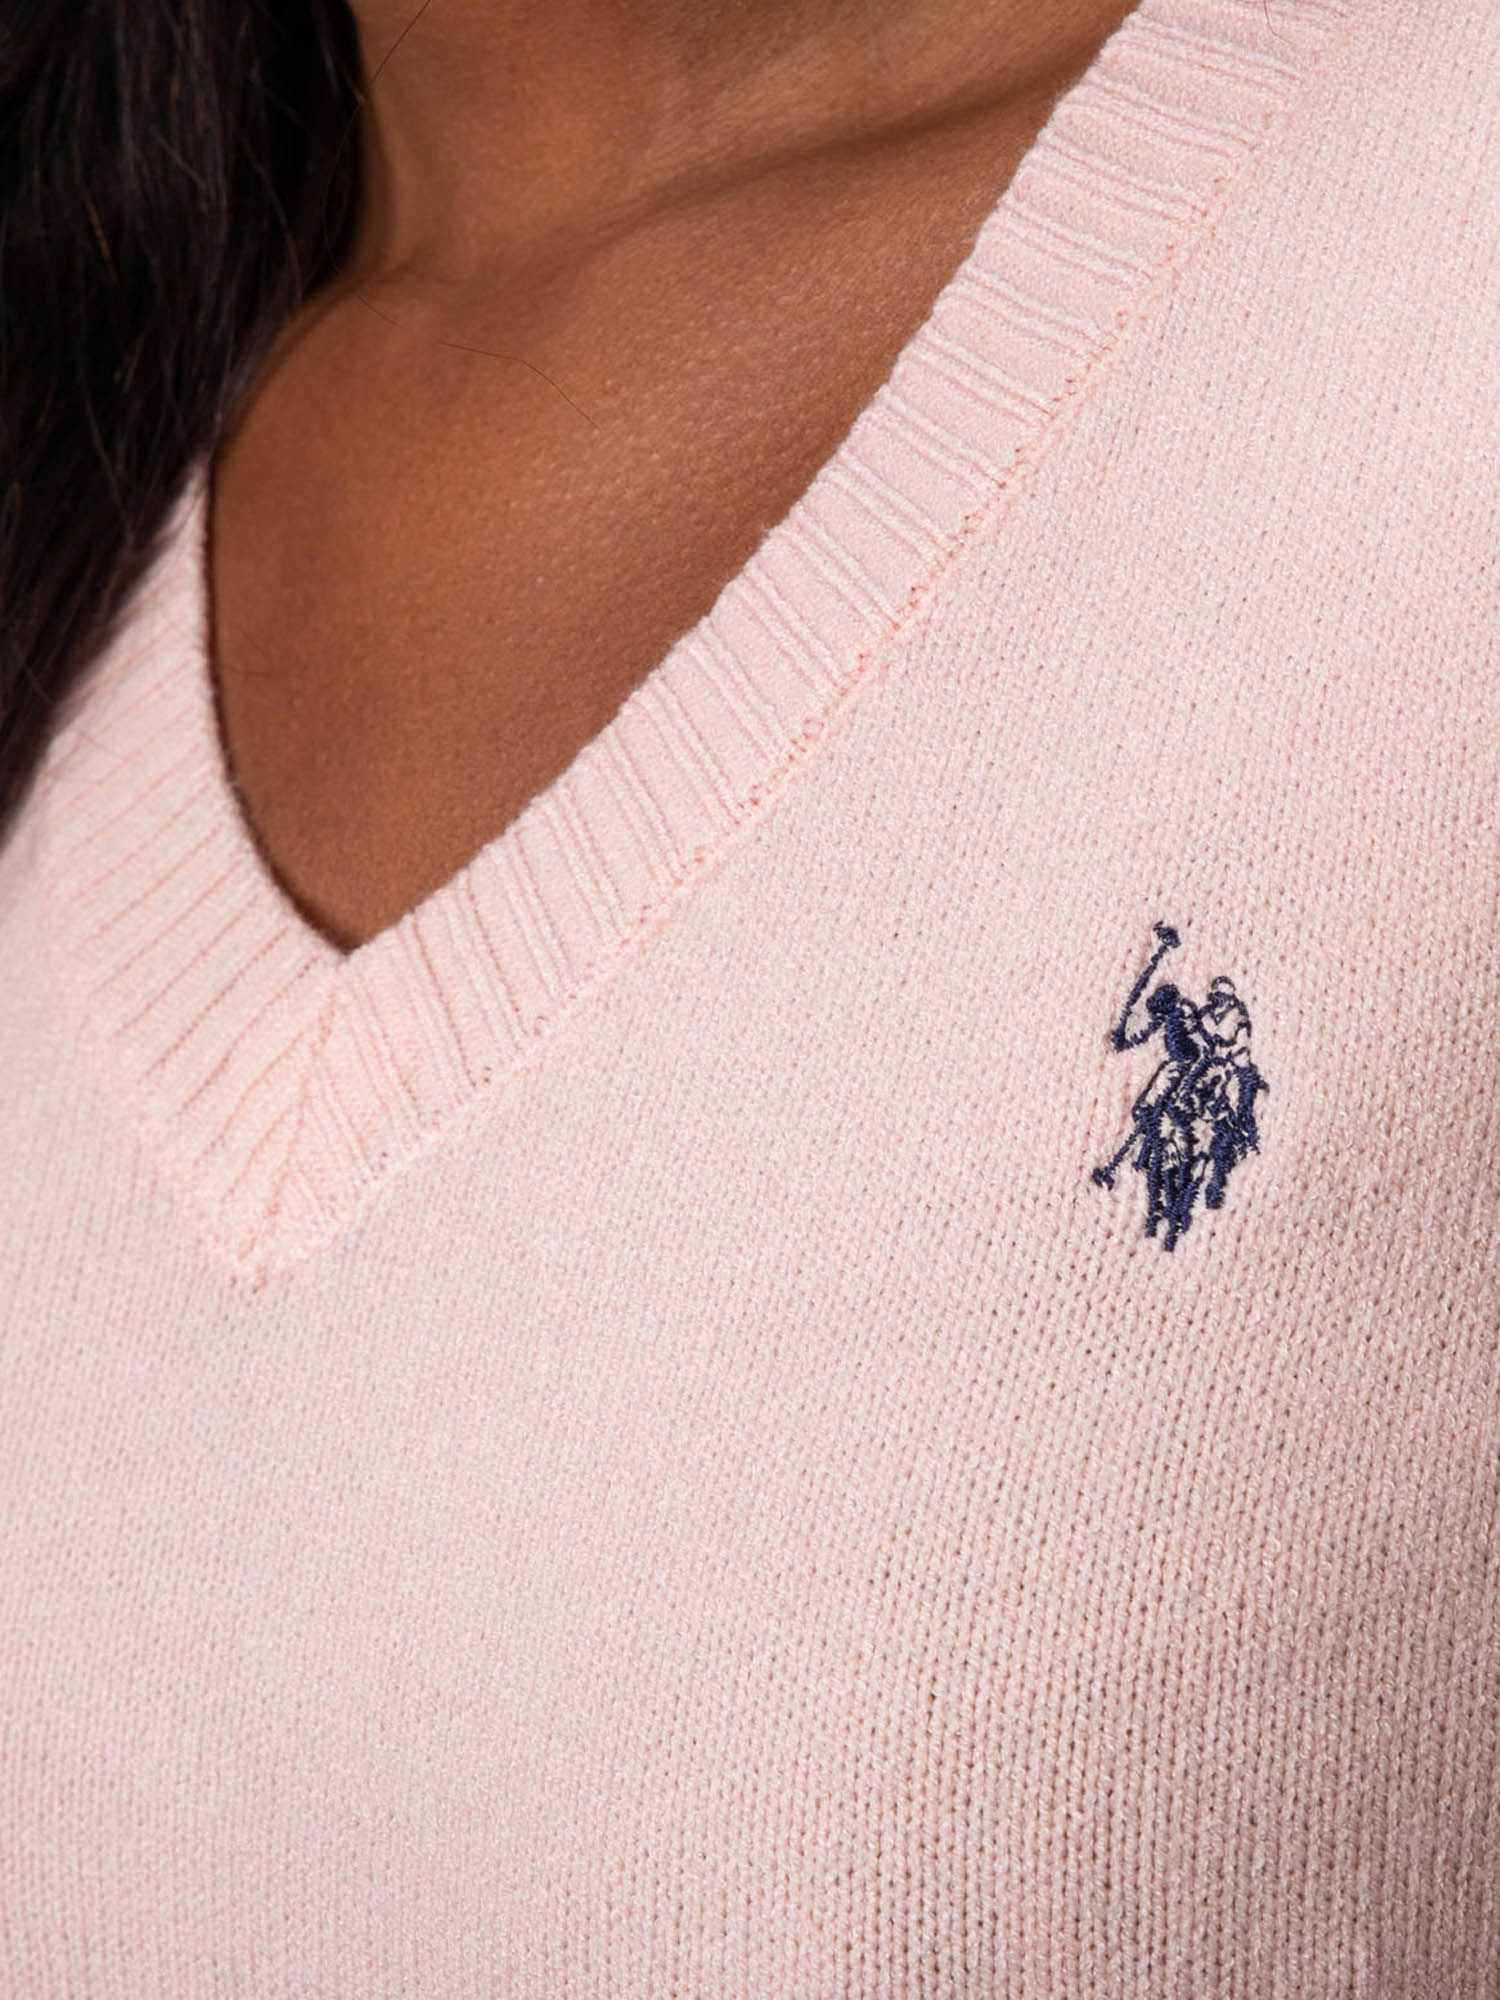 U.S. Polo Assn. Women’s Soft Touch V-Neck T-Shirt - image 4 of 4